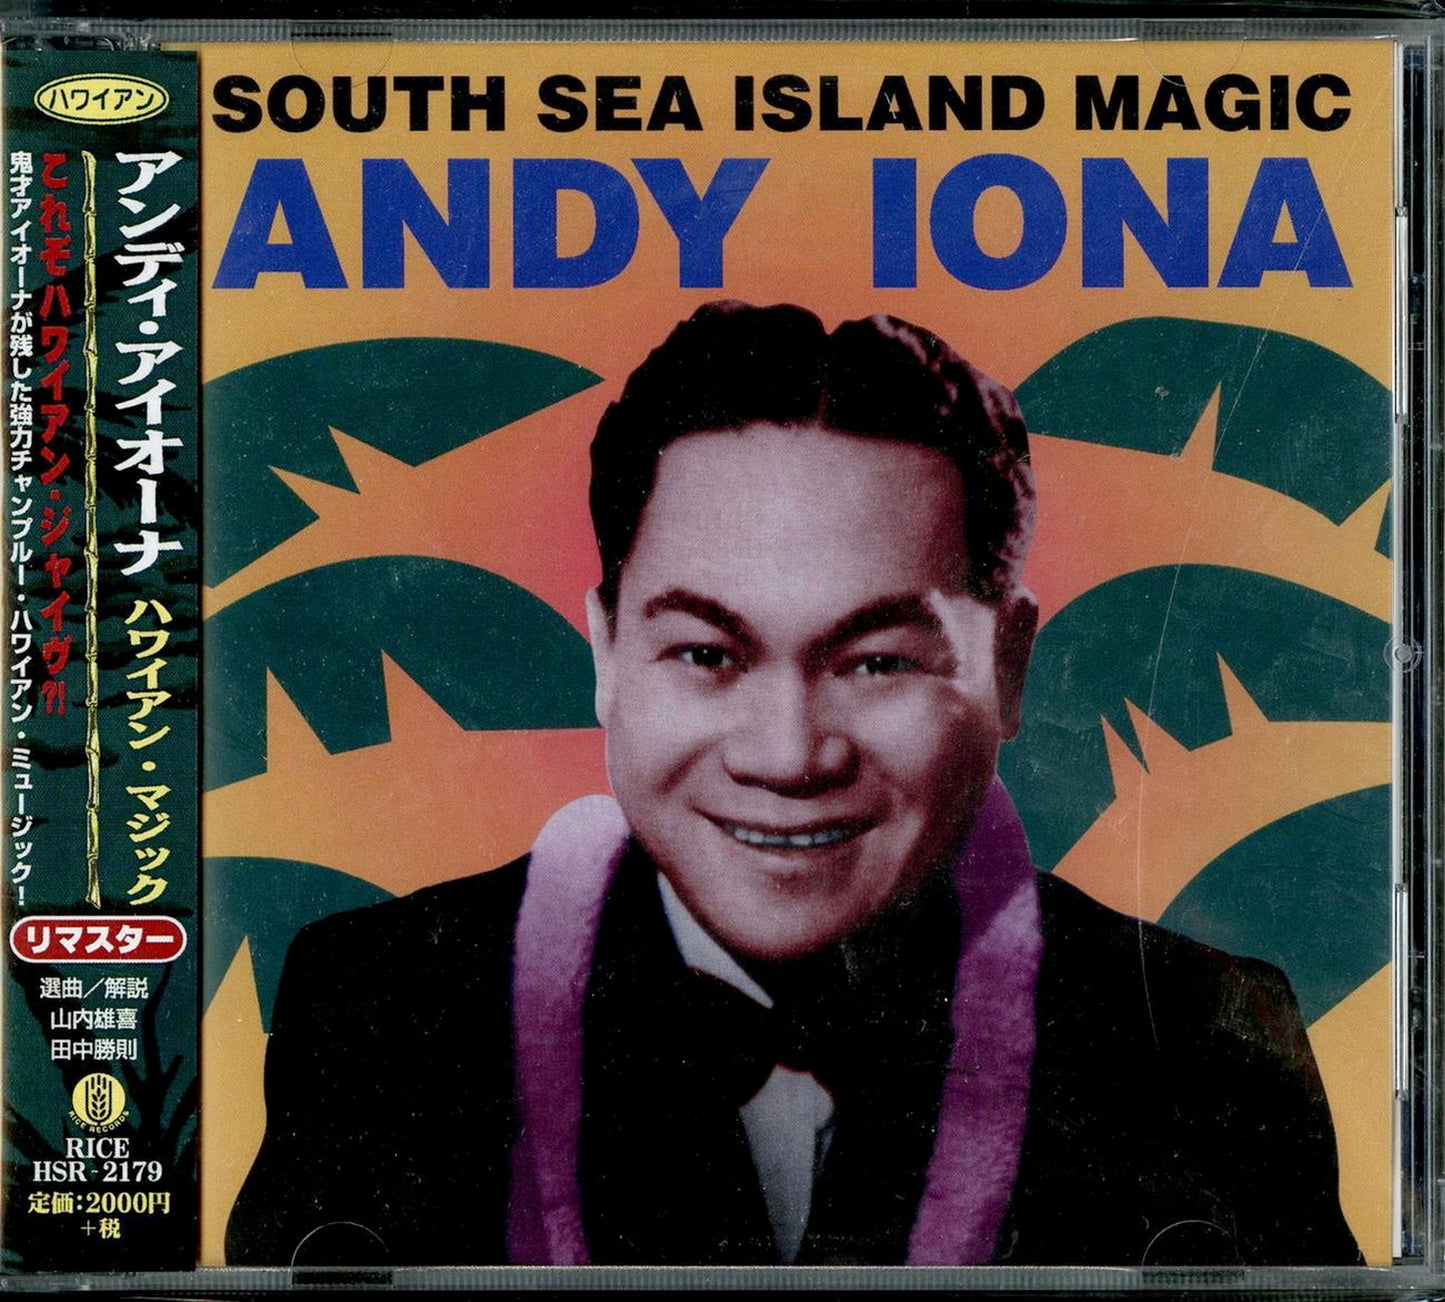 Andy Iona - South Sea Island Magic - Japan CD